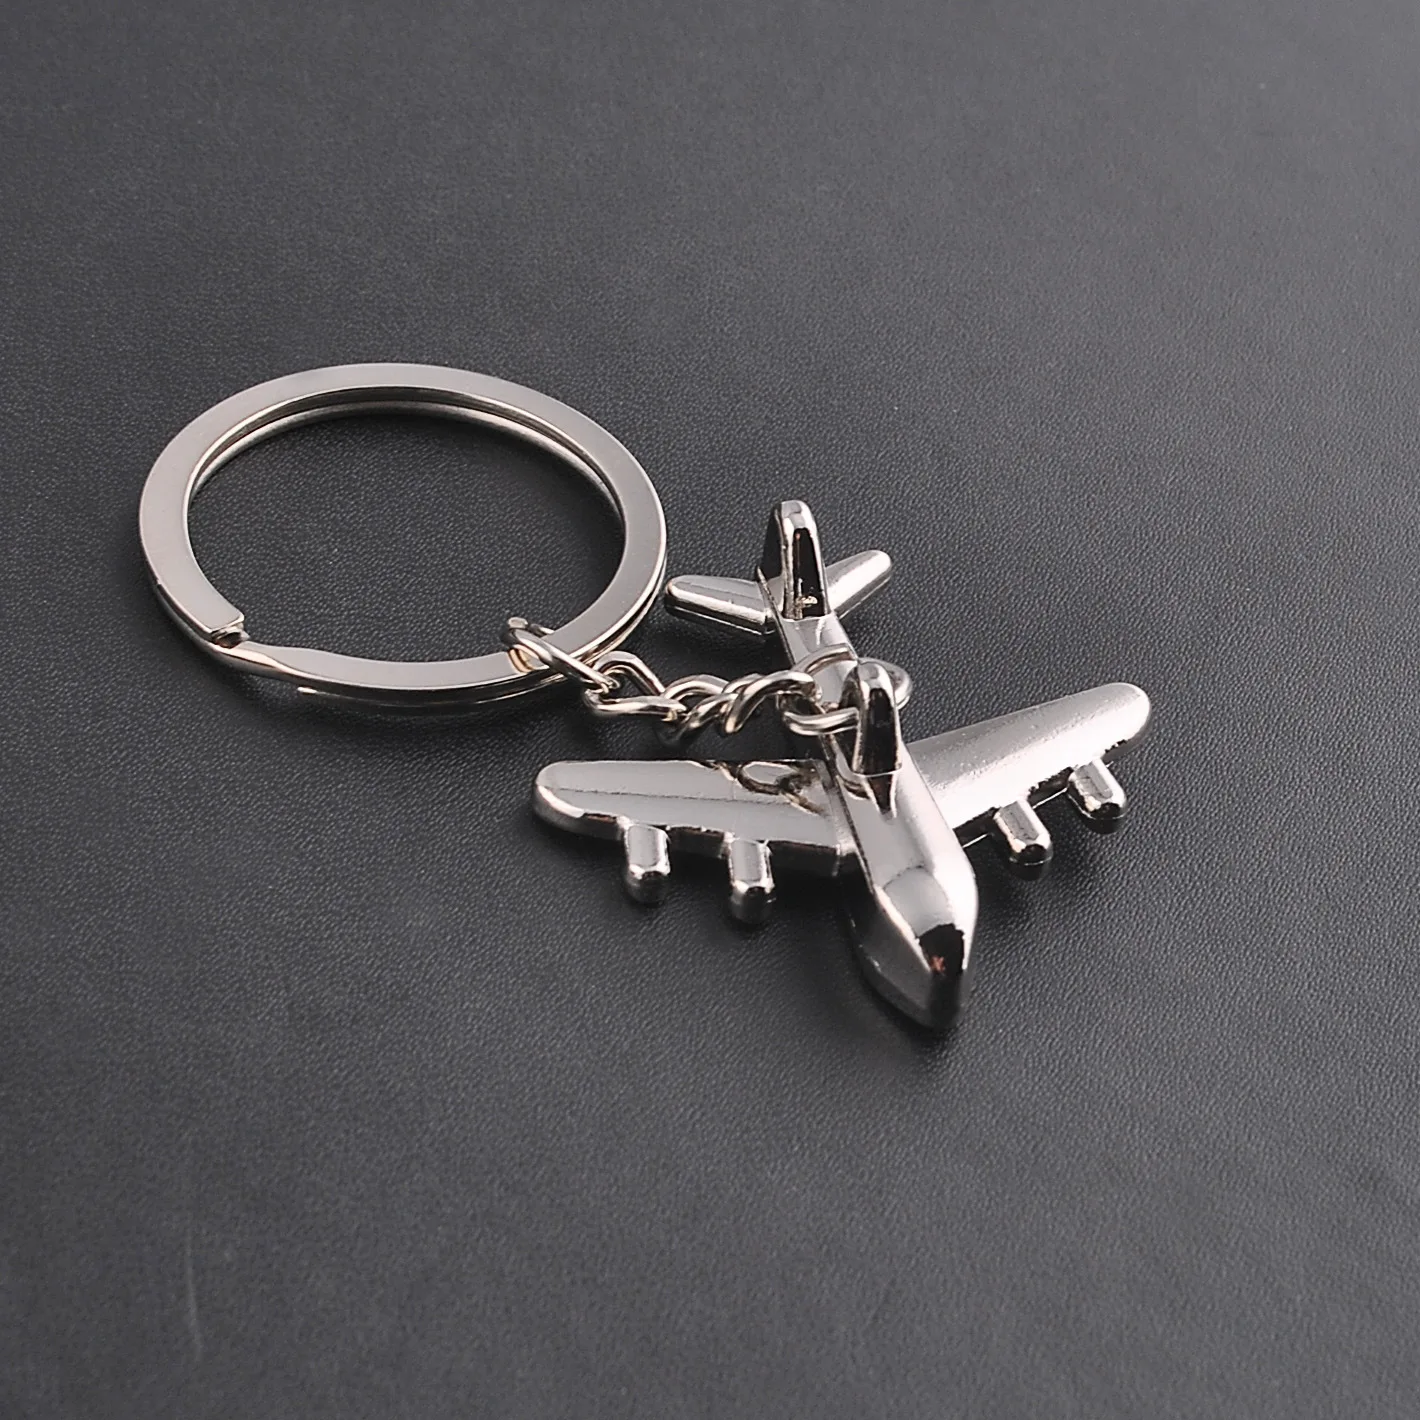 Metal airplane keychain model pendant gift new 042 